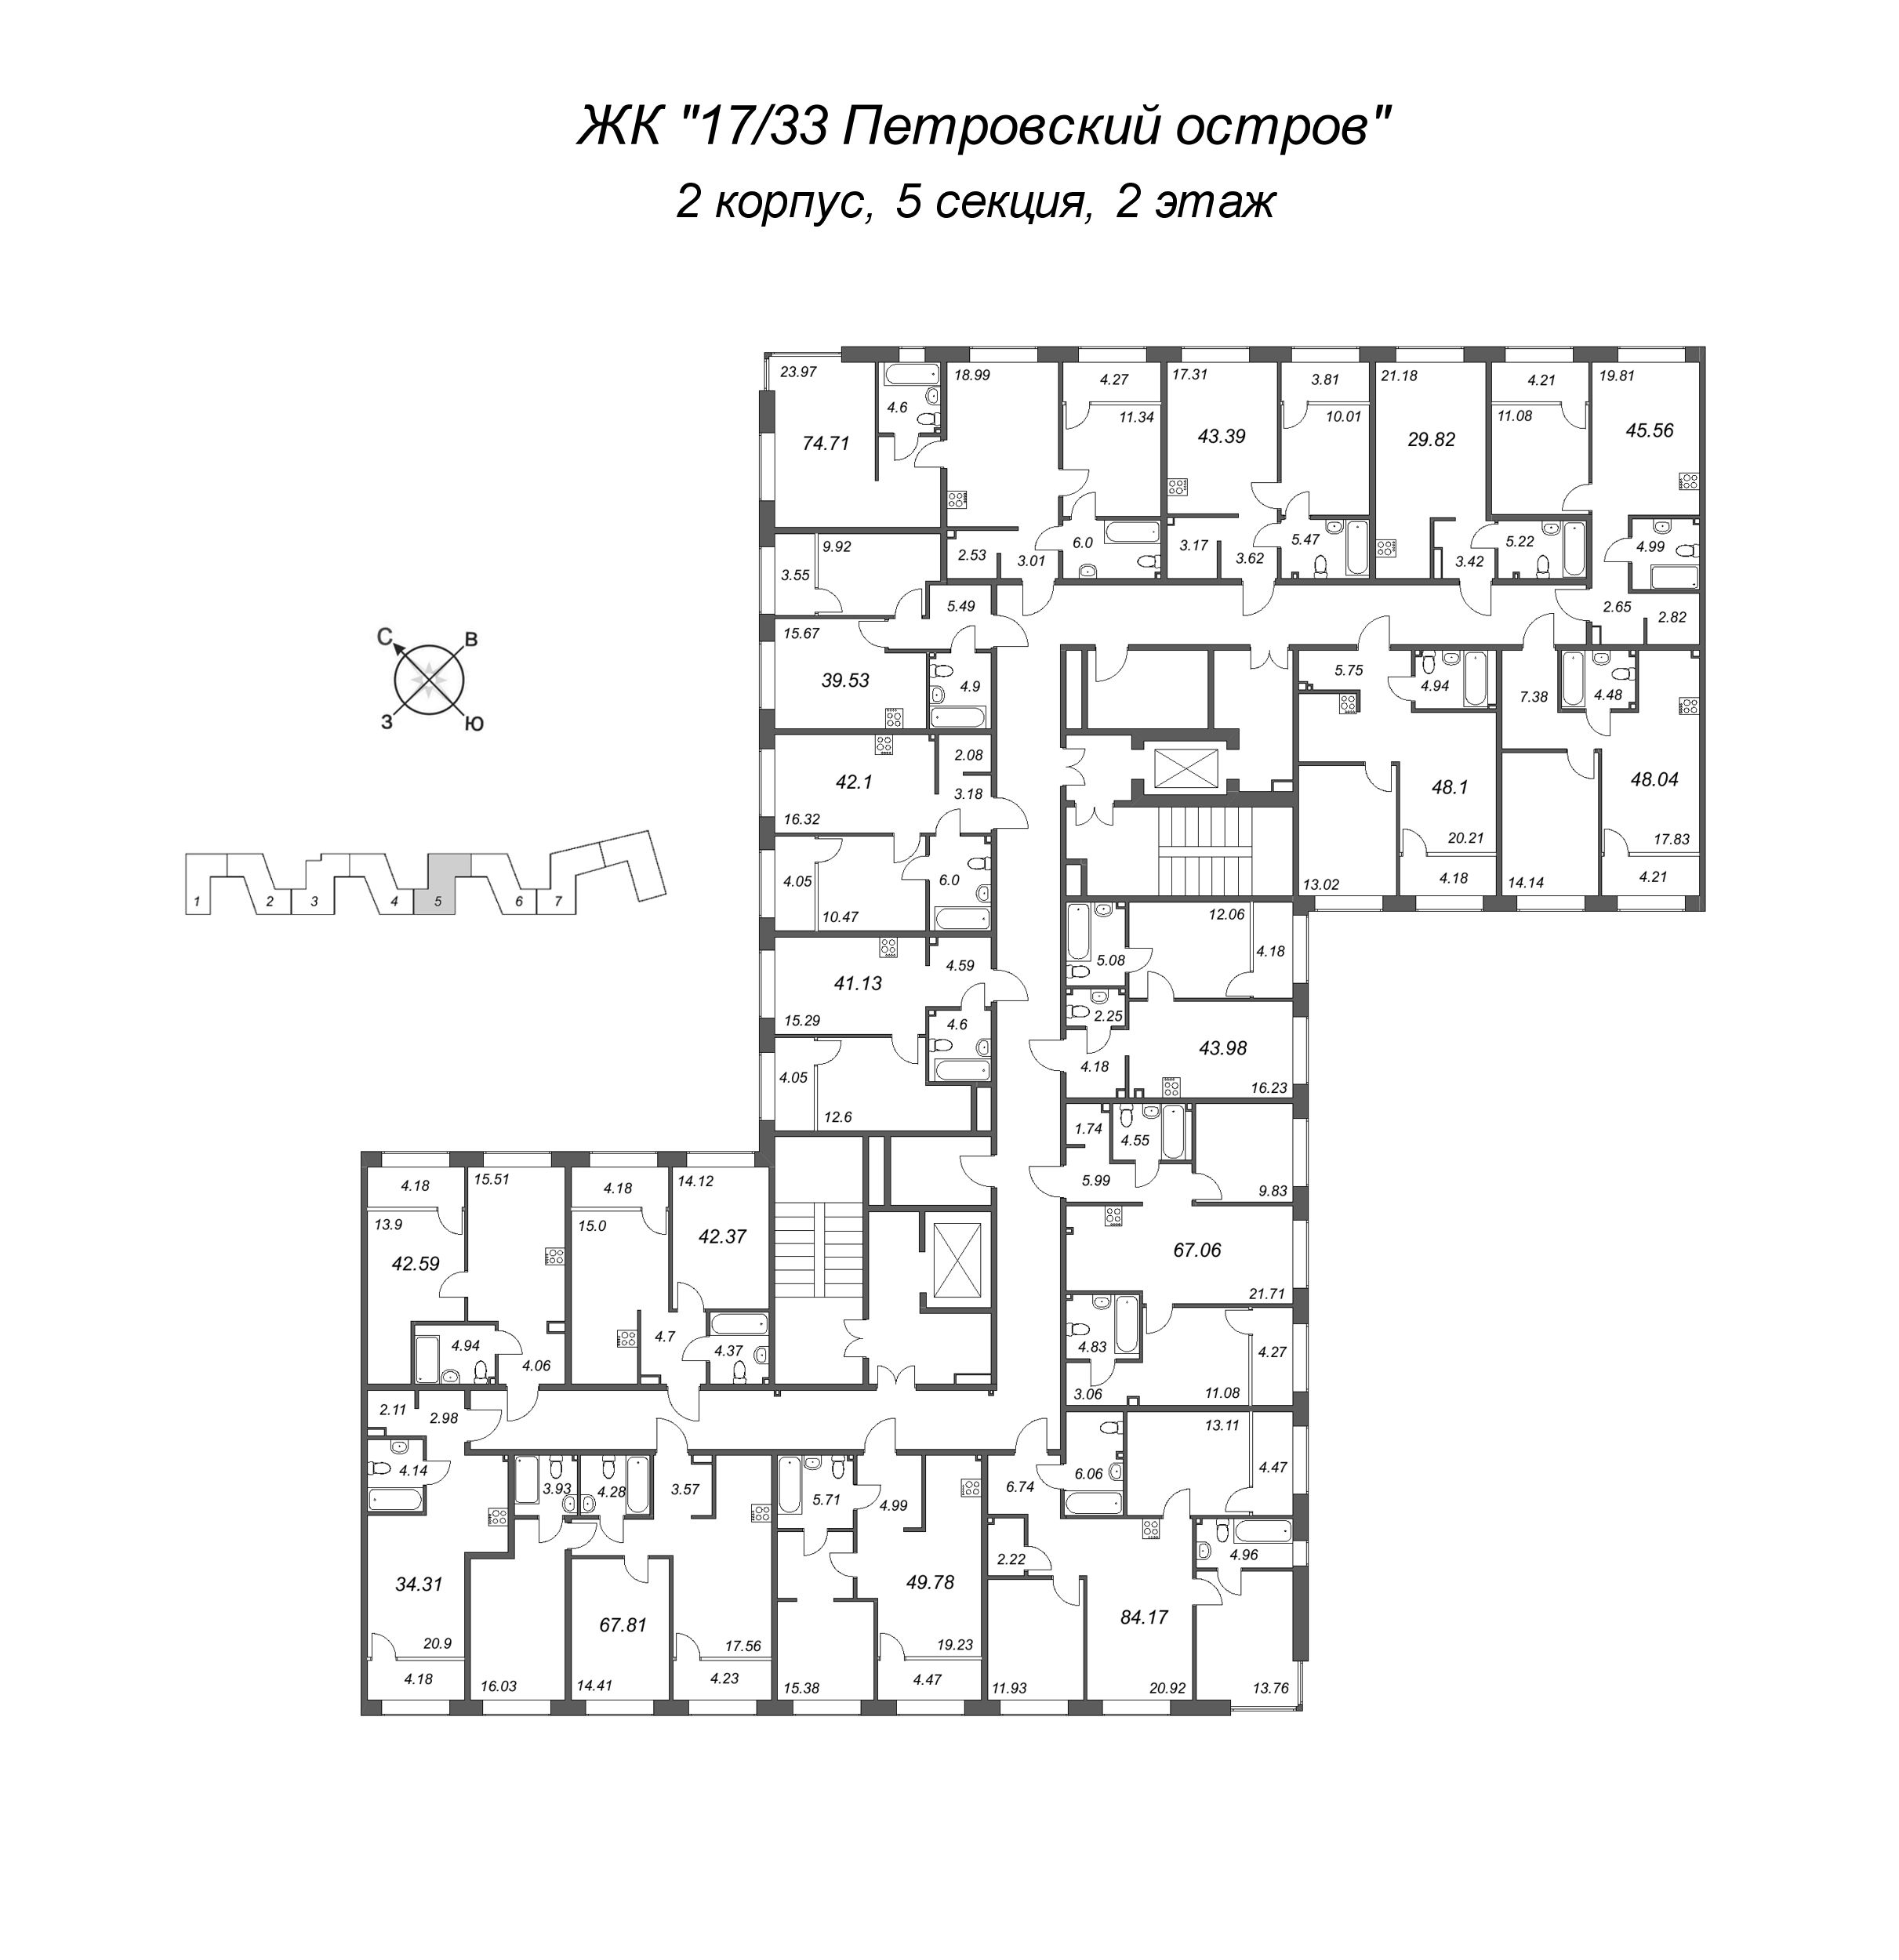 2-комнатная (Евро) квартира, 41.13 м² - планировка этажа